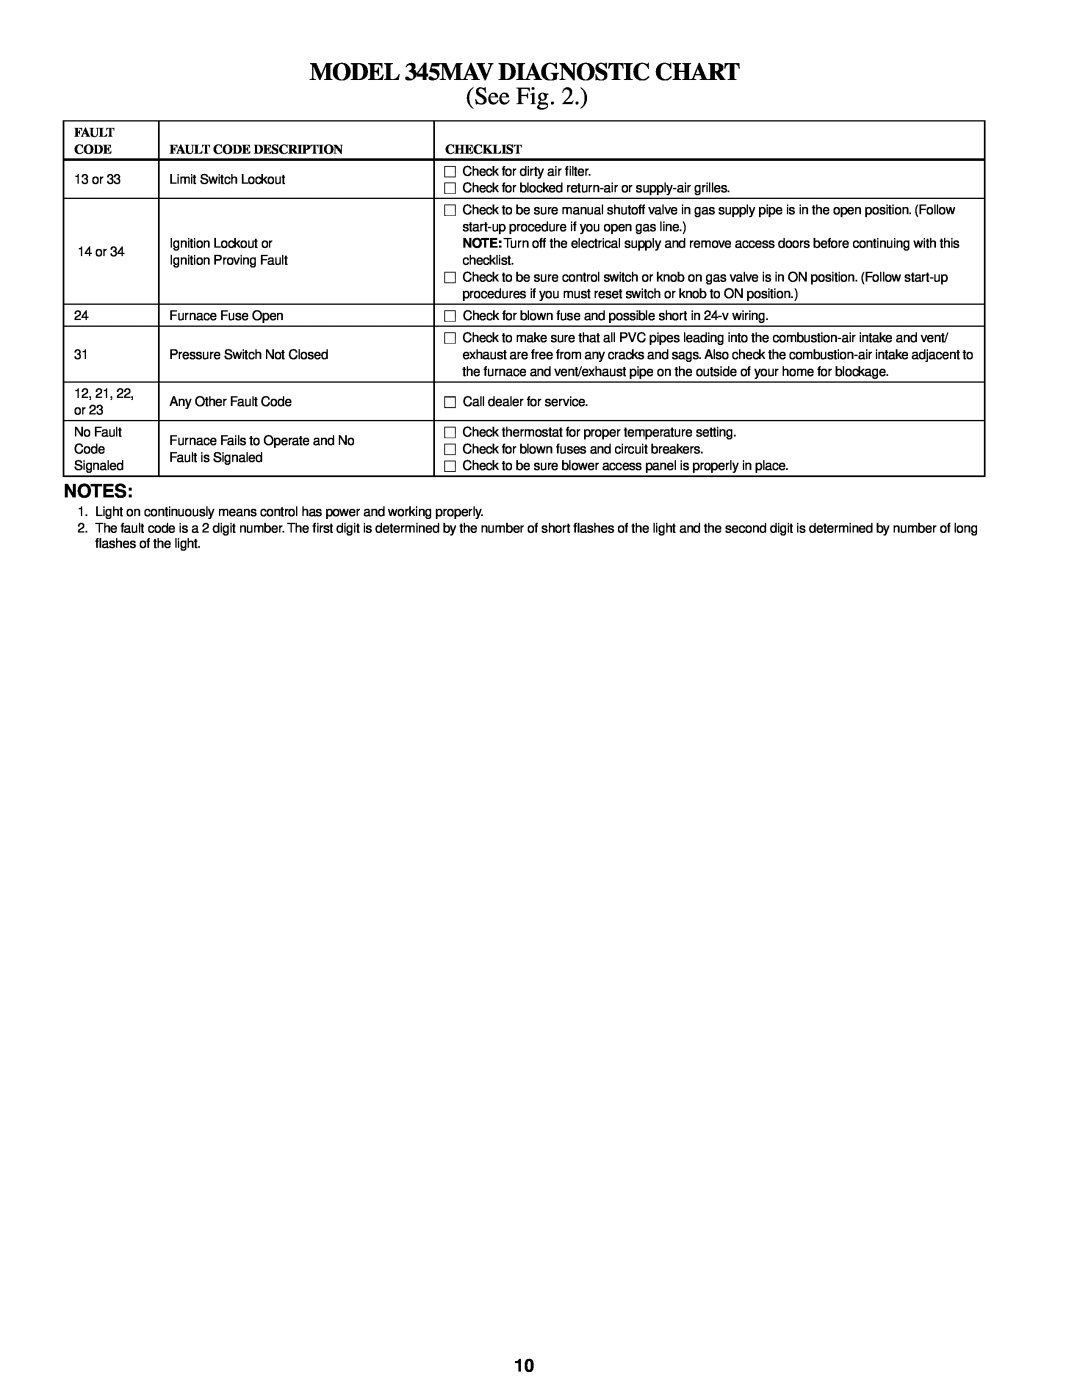 Bryant manual MODEL 345MAV DIAGNOSTIC CHART, See Fig, Fault Code Description, Checklist 